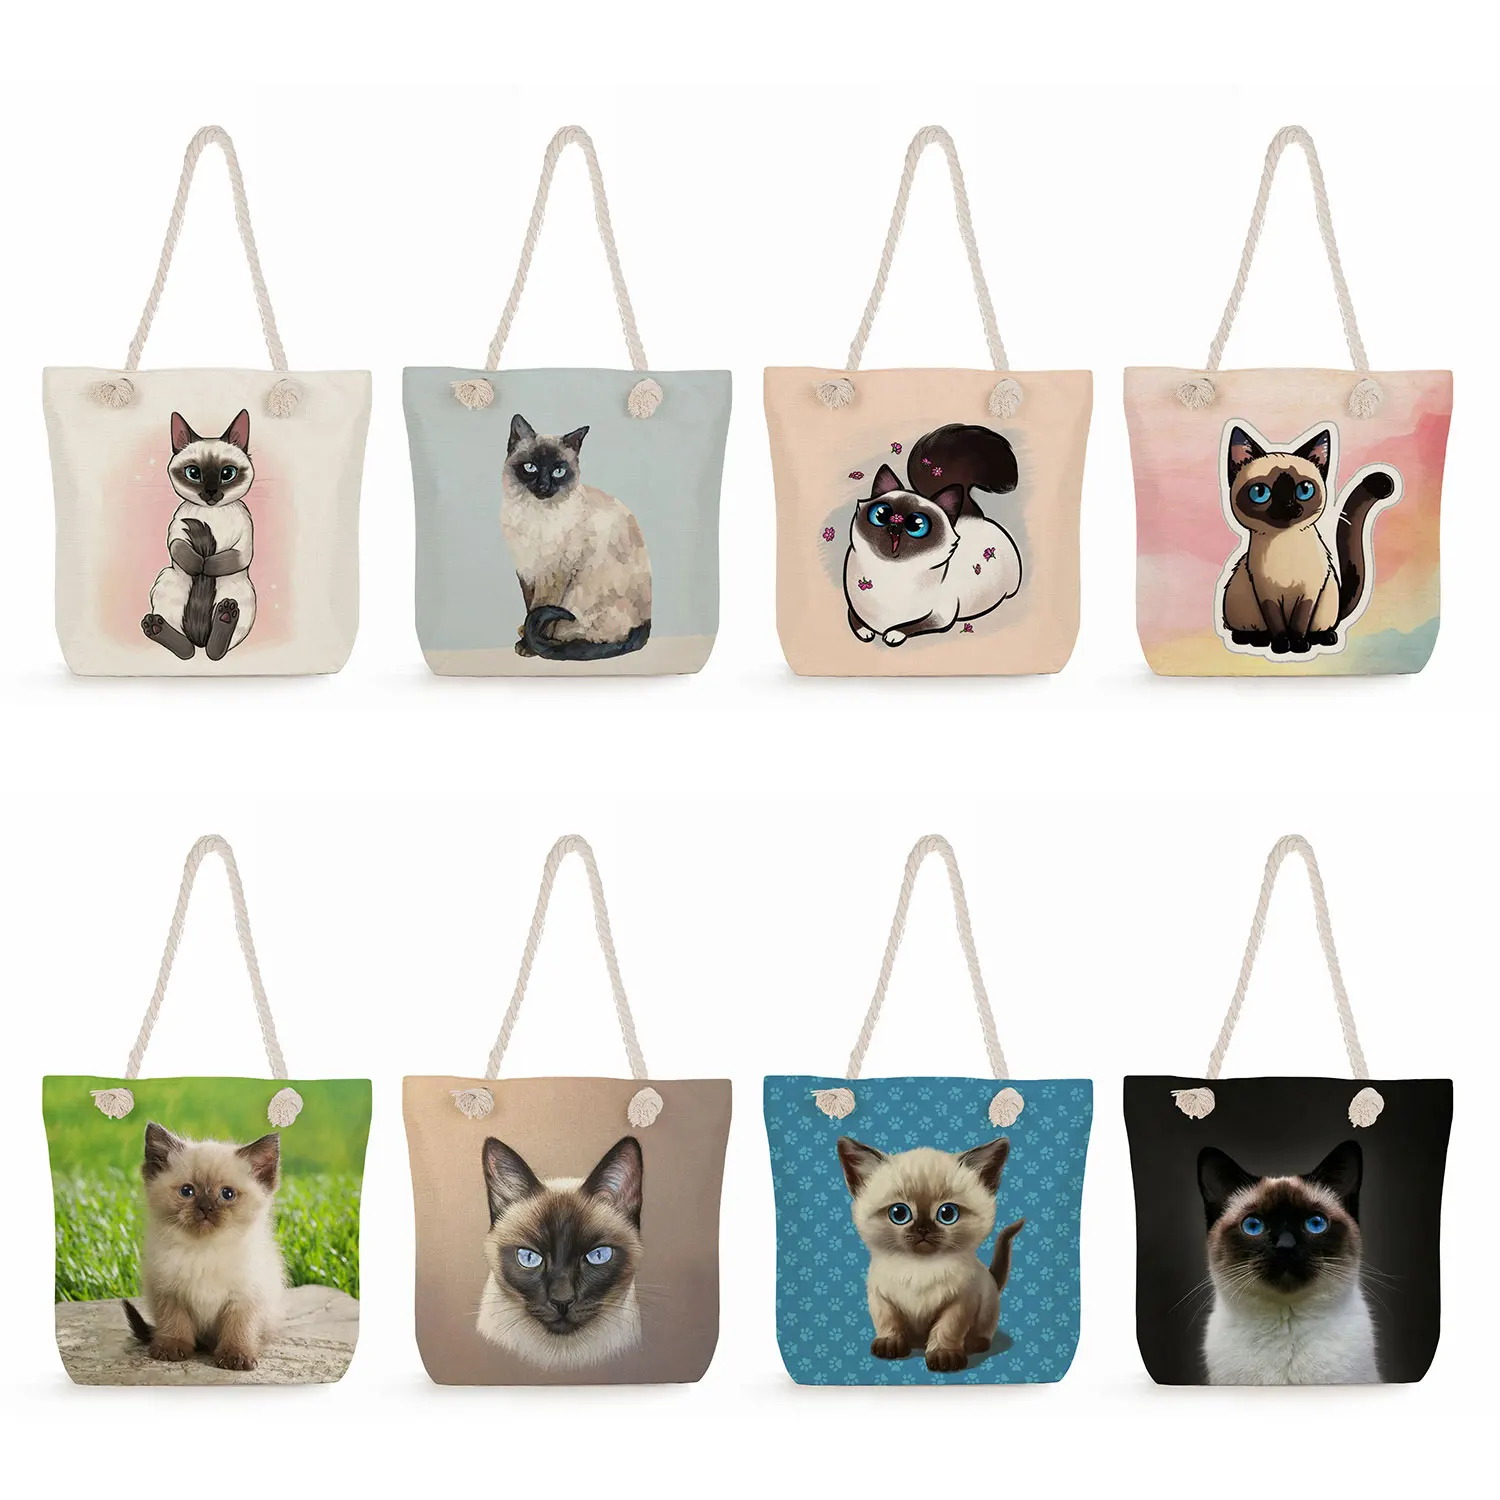 

Outdoor Shopping Bag Large capacity Beach Travel Cute Animal Siamese Cat Printed Women Shoulder Bag Eco Reusable Fashion Handbag